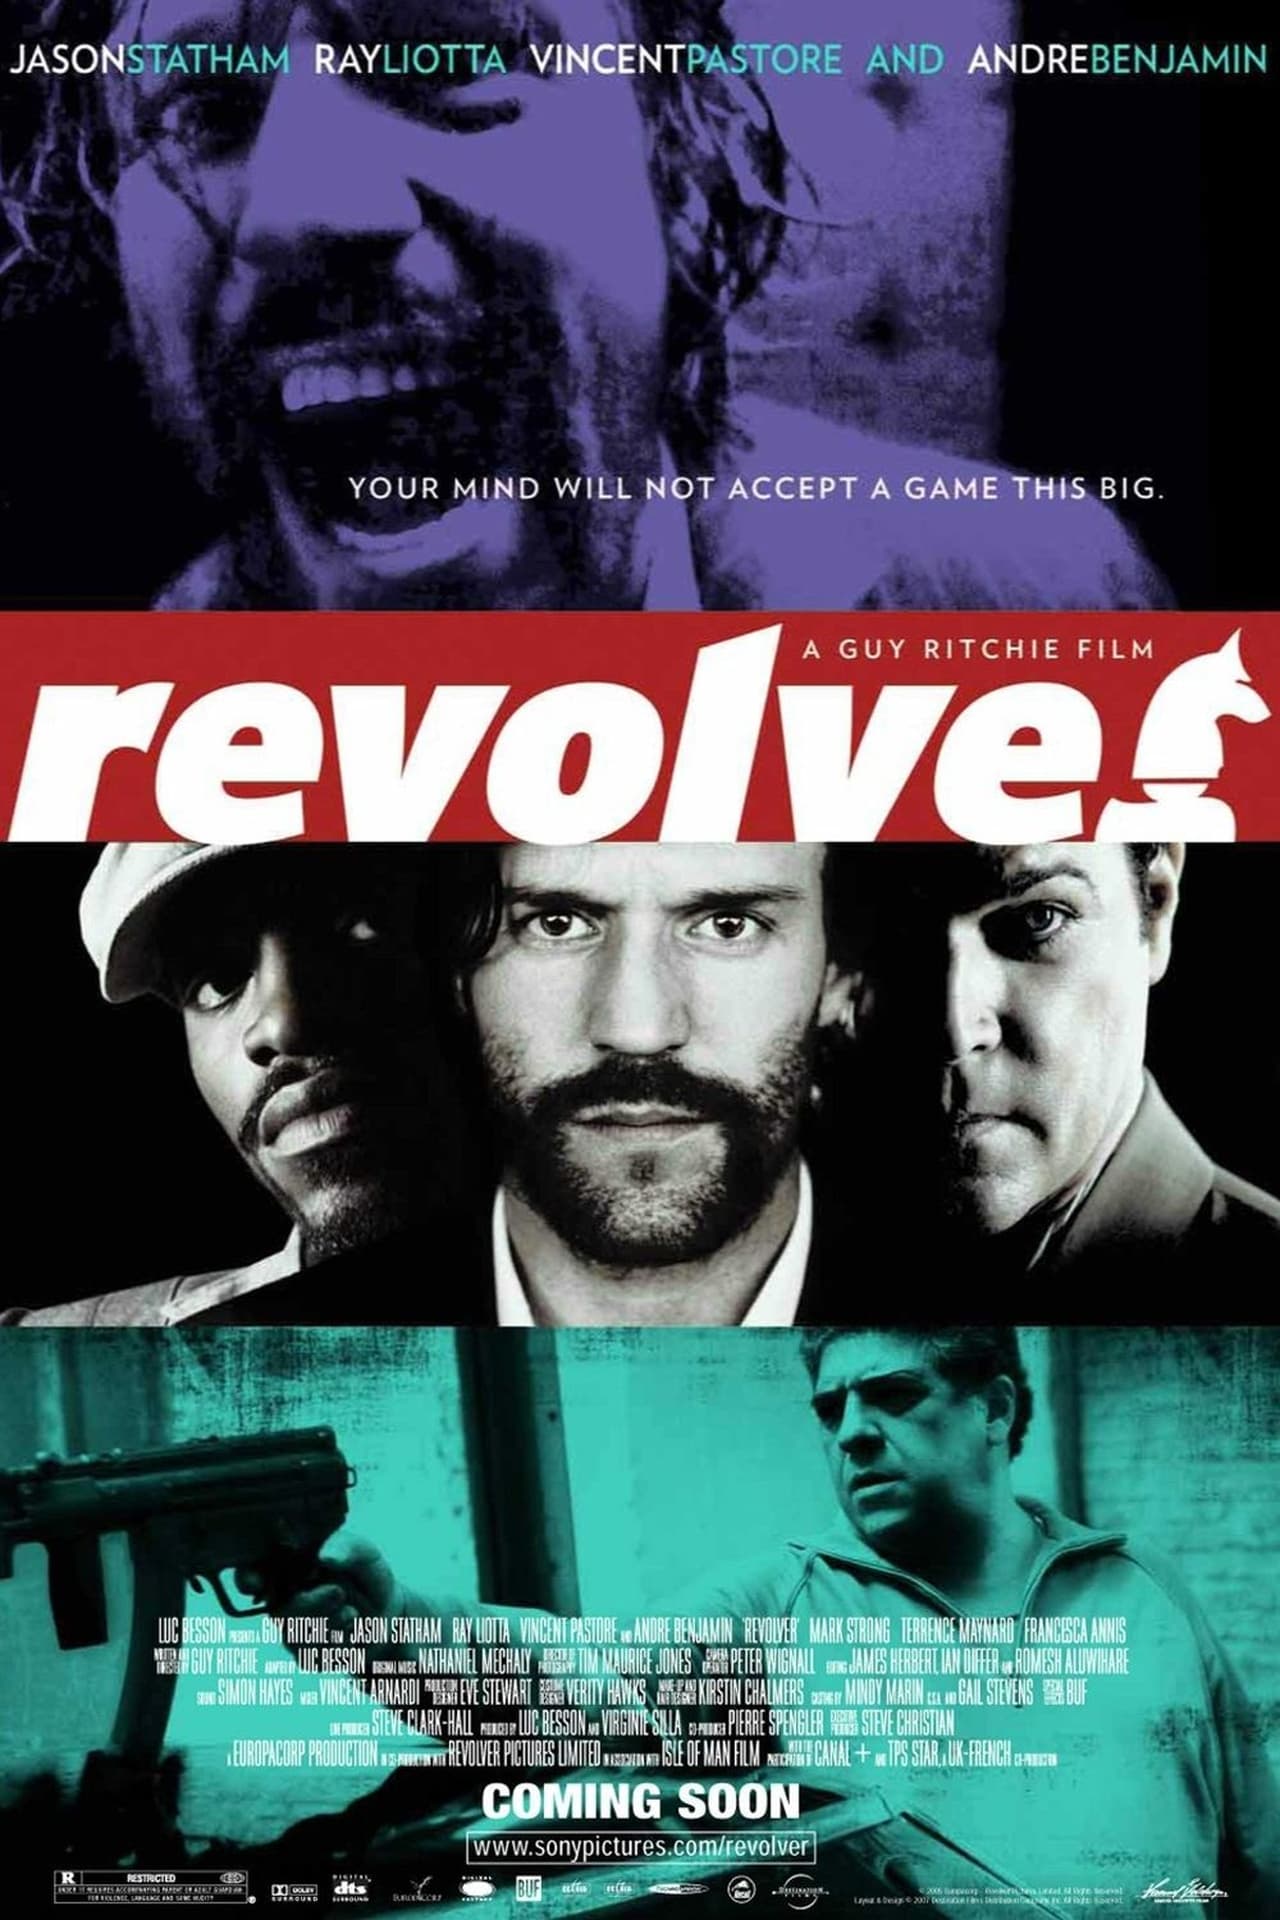 EN - Revolver (2005) GUY RITCHIE, JASON STATHAM